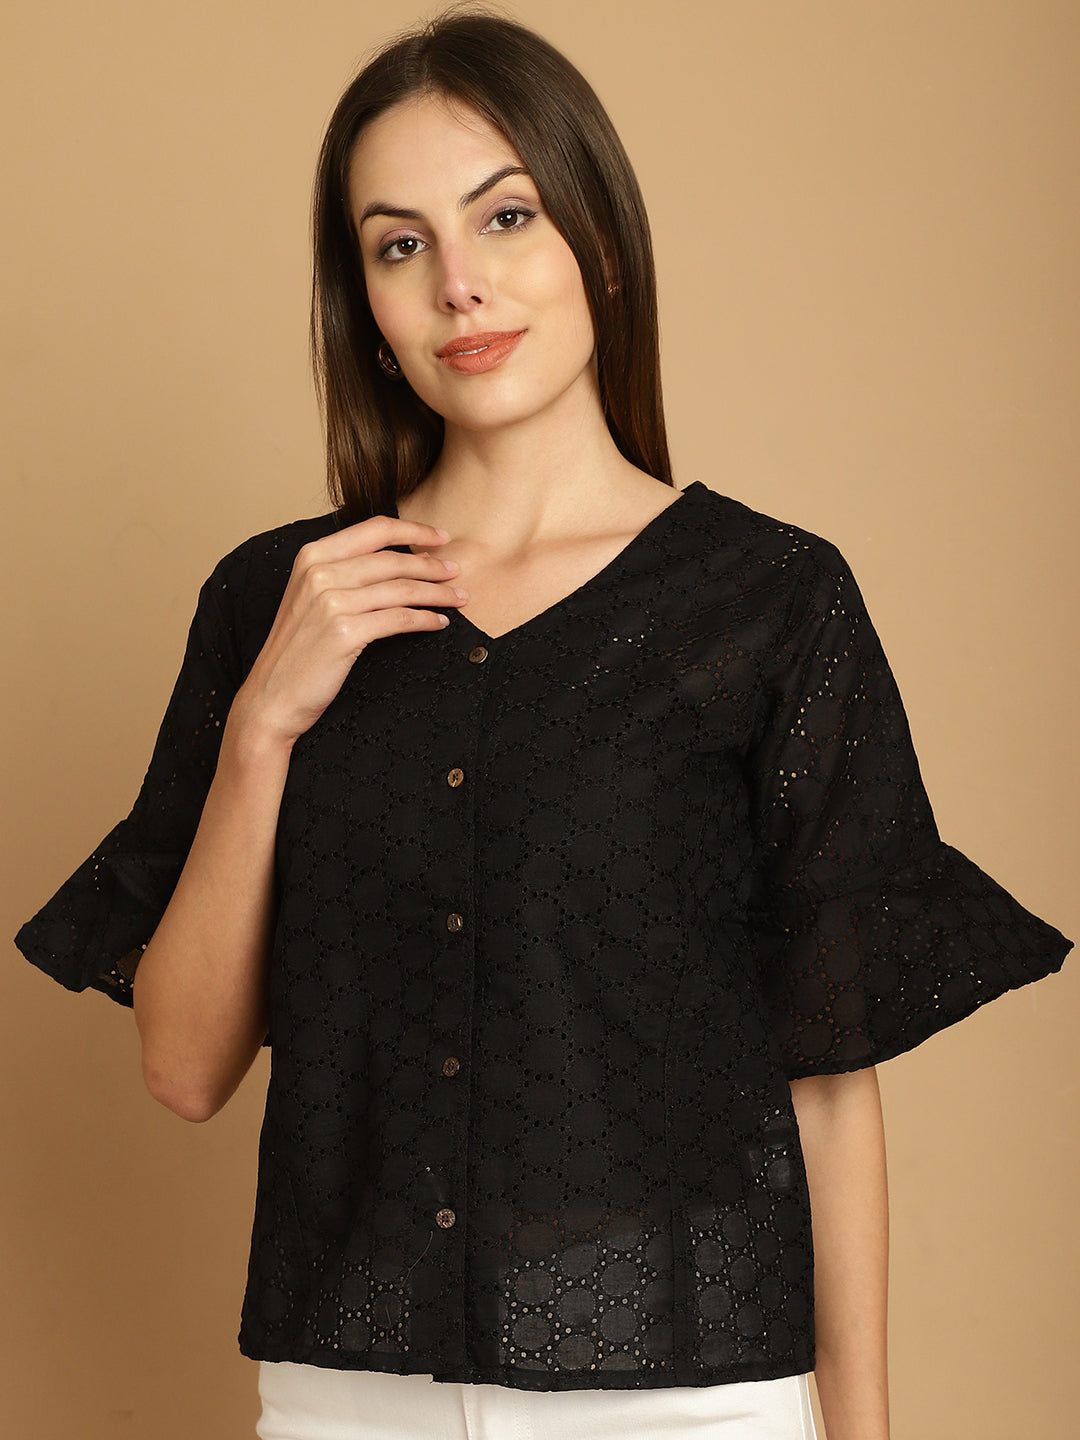 Embroidered Cotton V-Neck Top for Women ( JNT 2020Black )